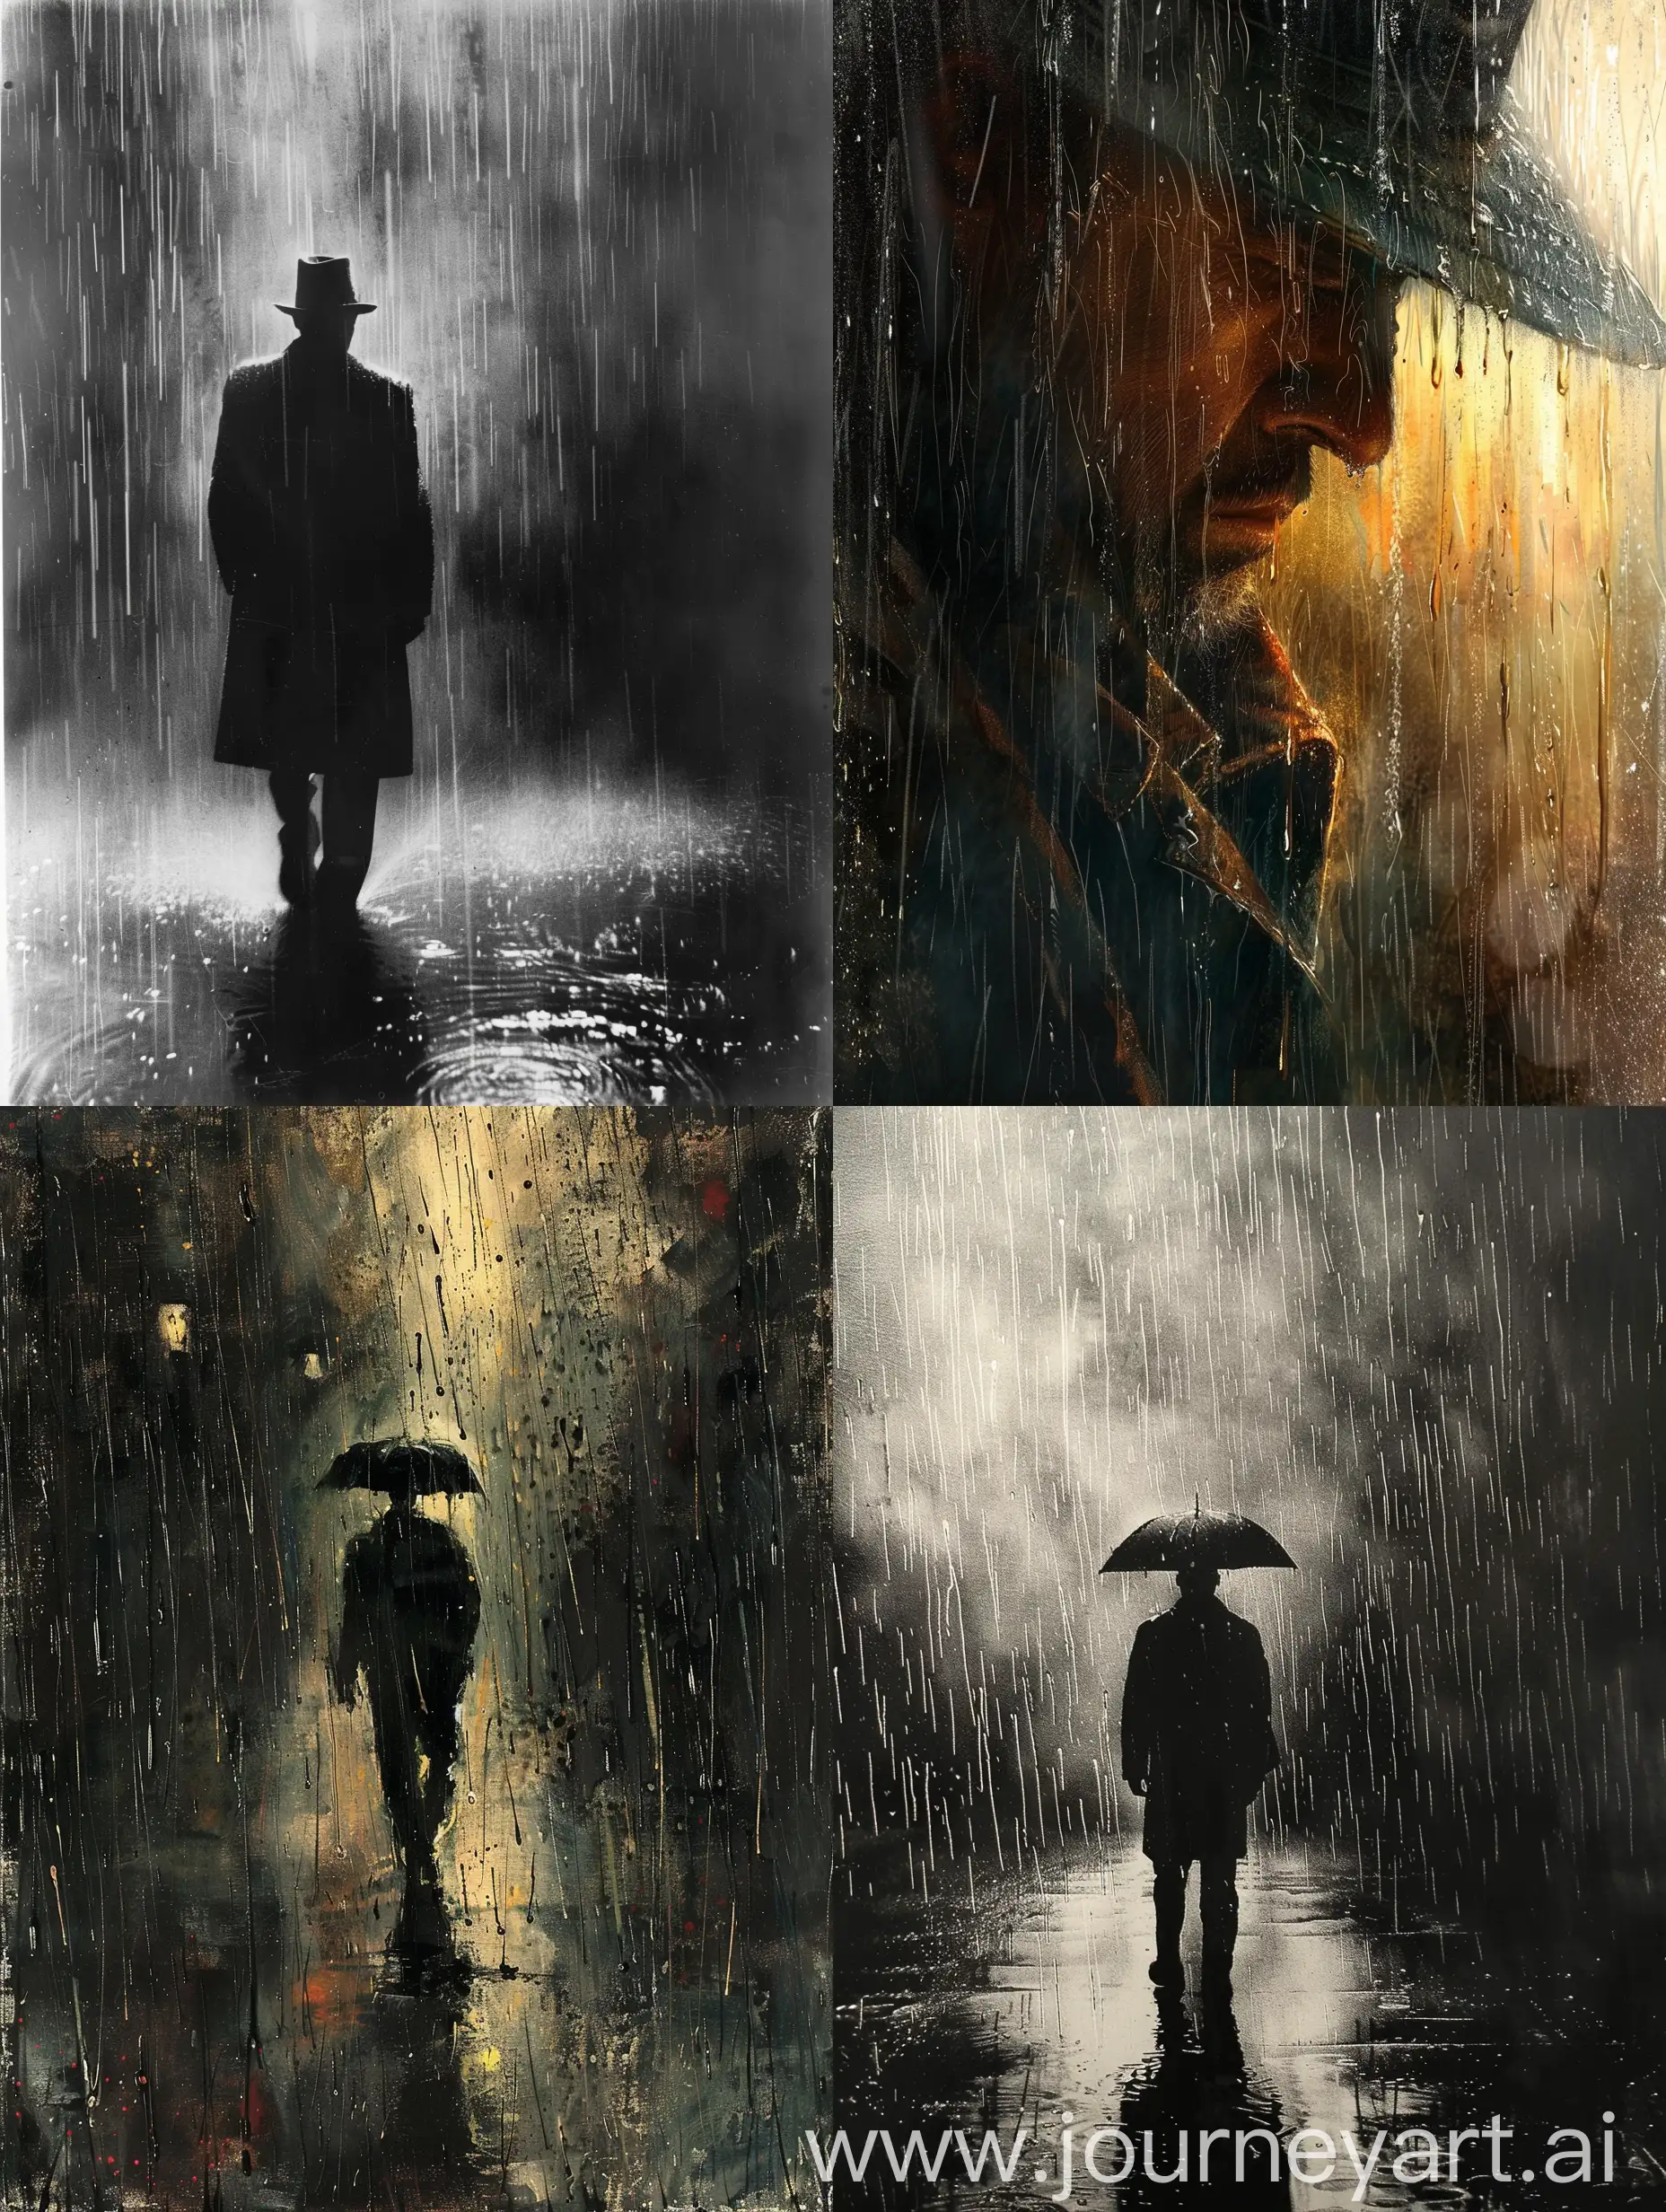 The man in the rain